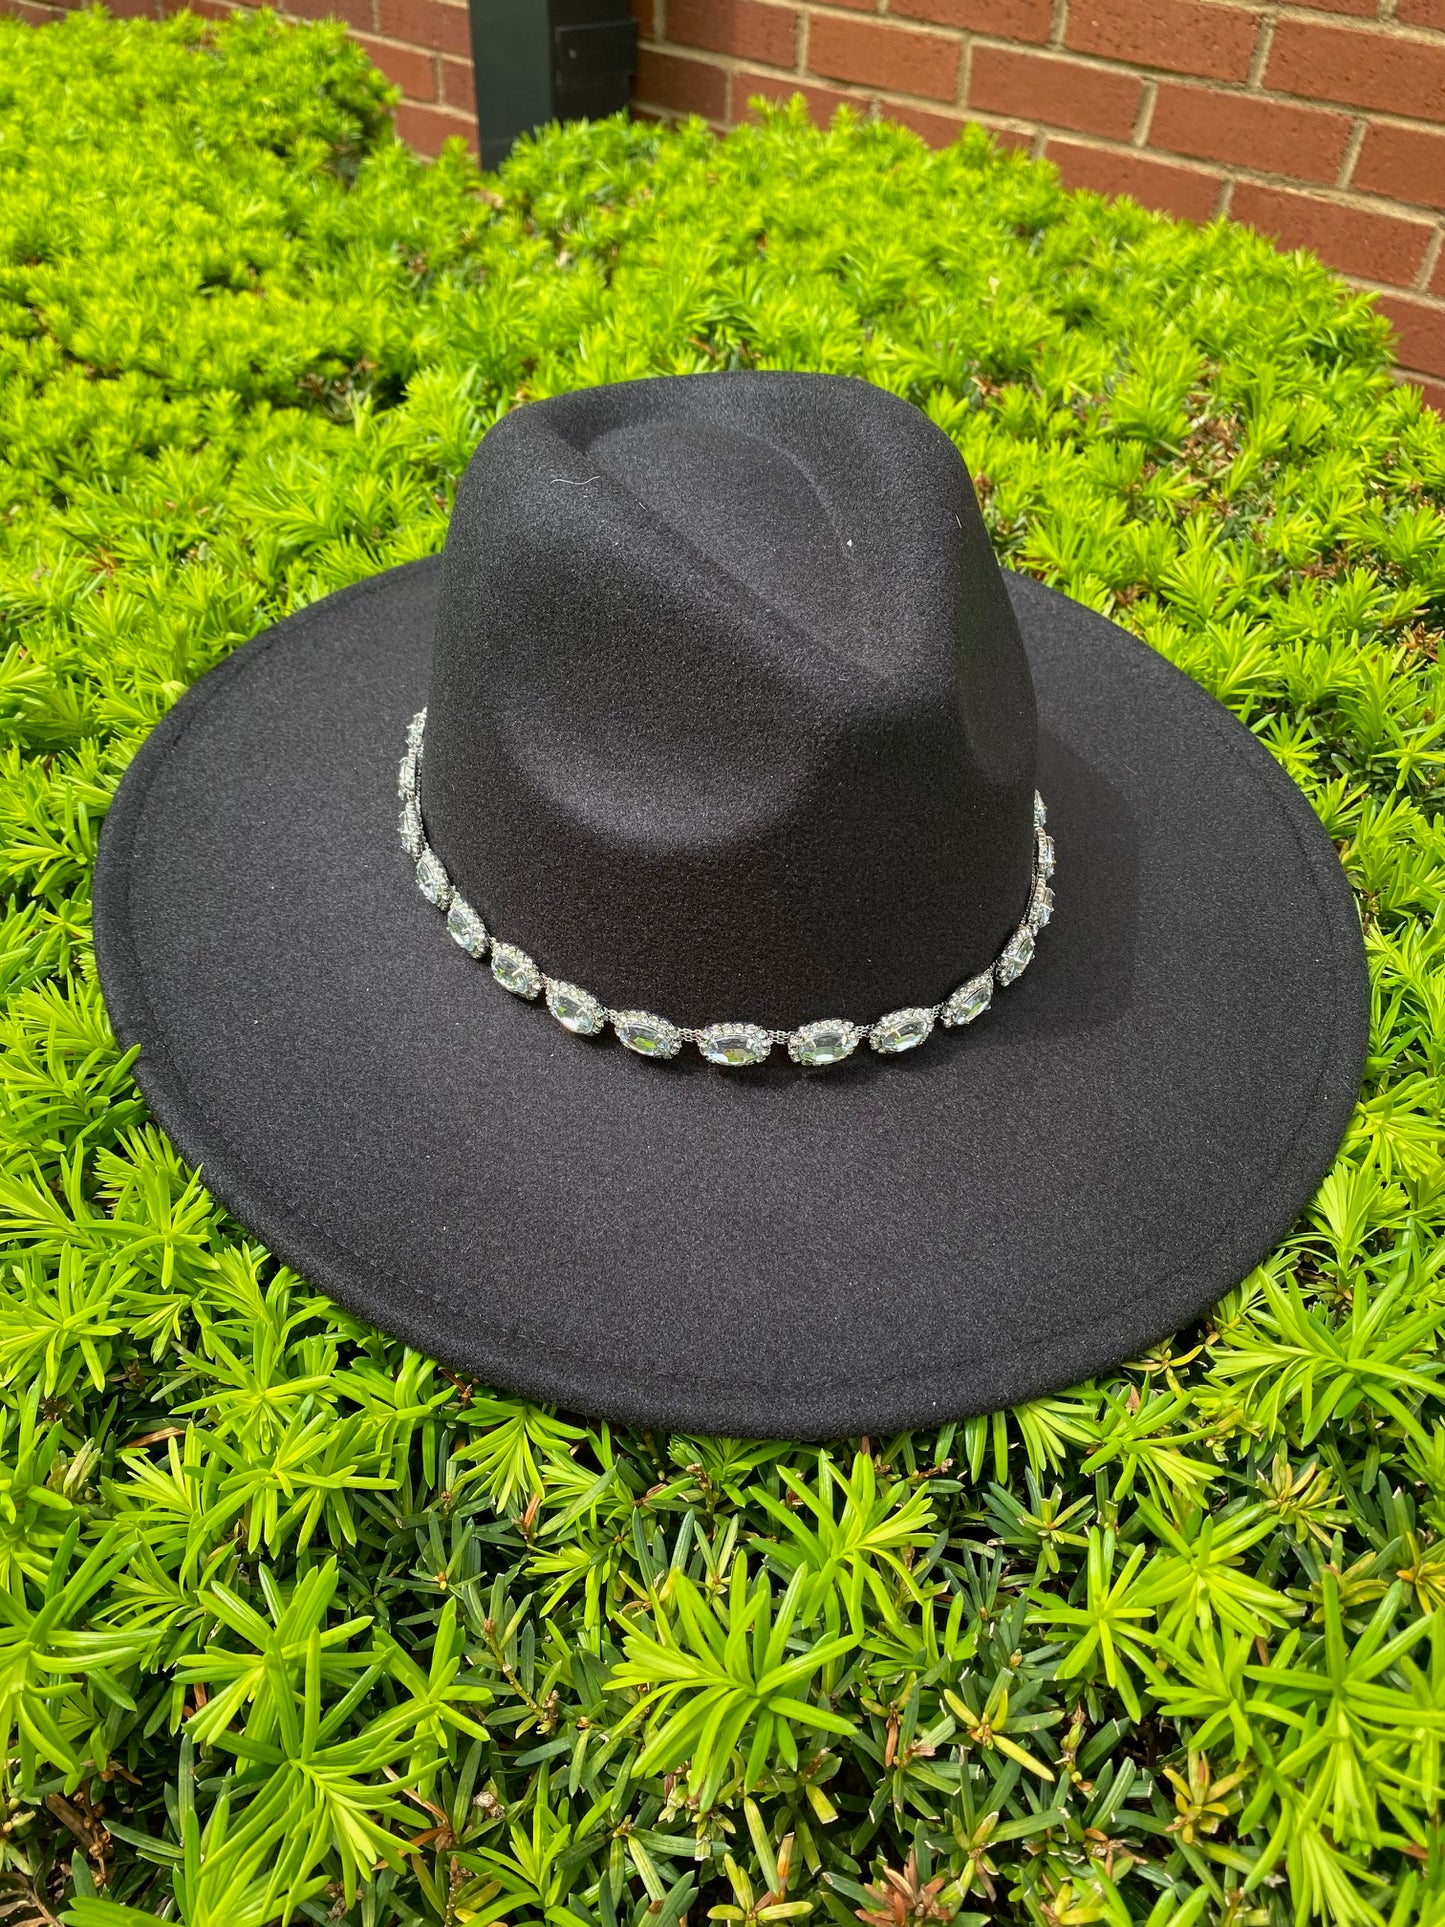 Black Rhinestone Belt Hat